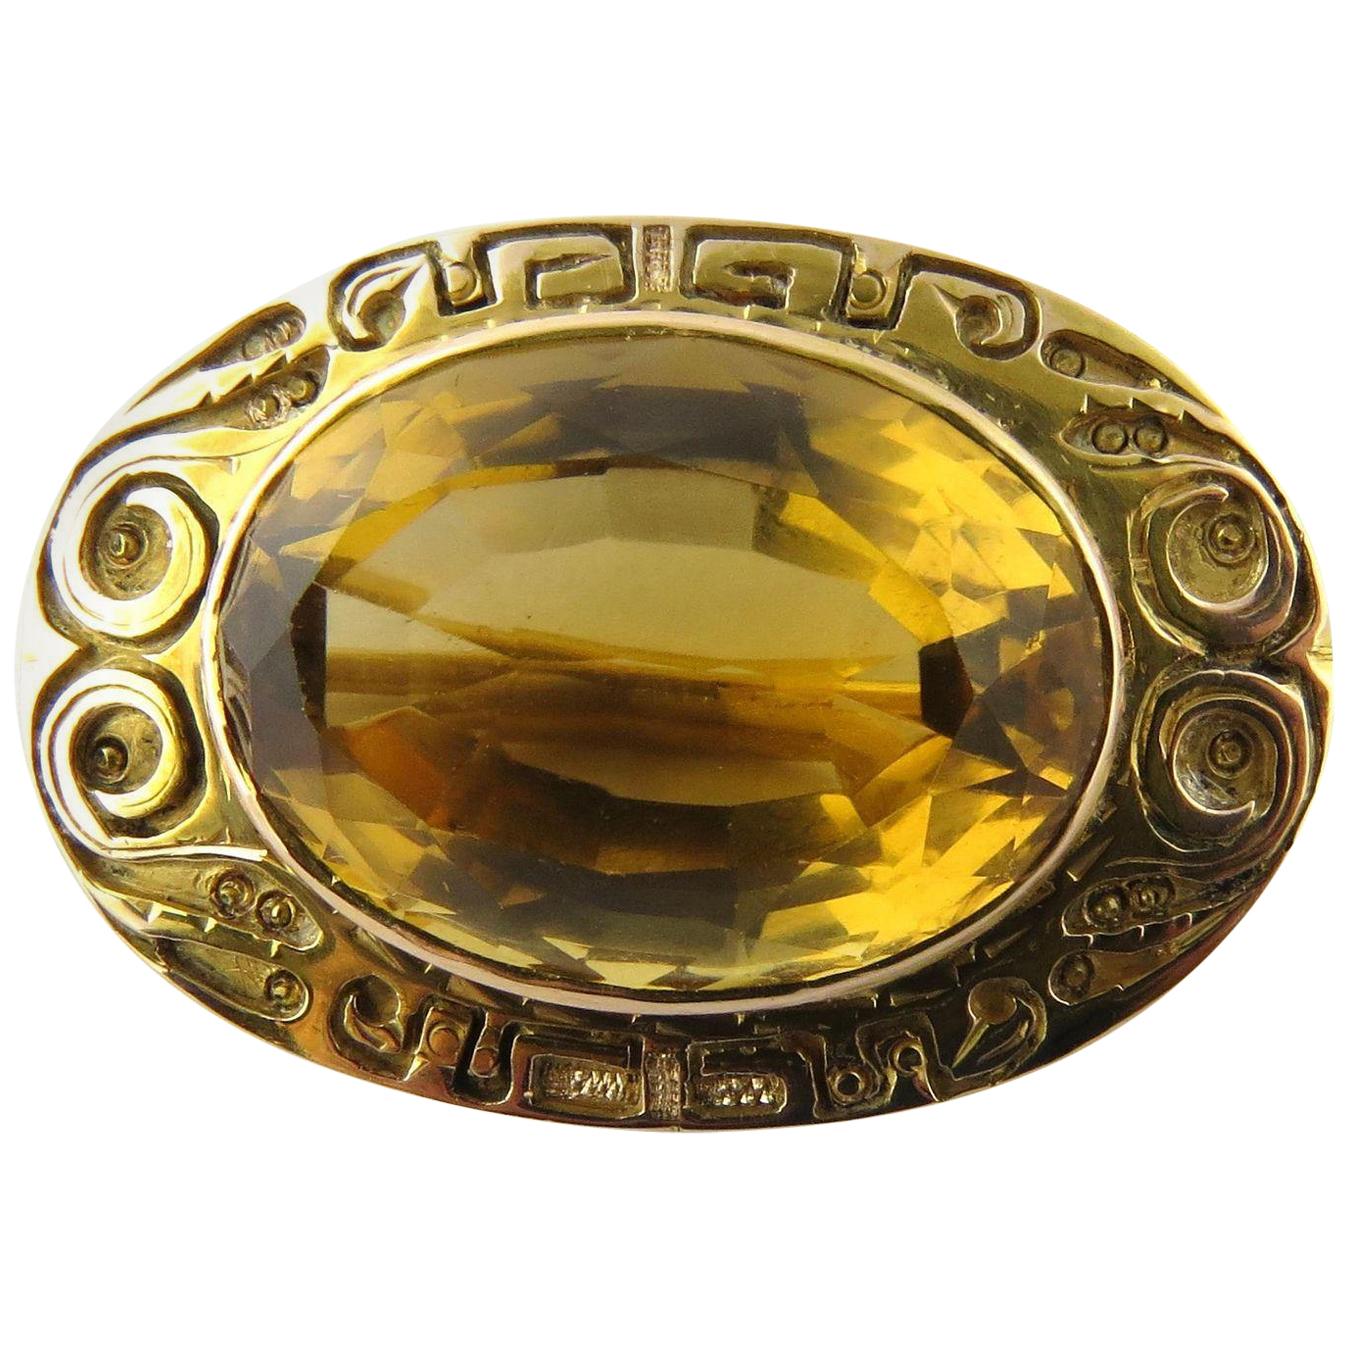 10 Karat Yellow Gold Bezel Set Large Oval Citrine Brooch with Hand Engraved Rim